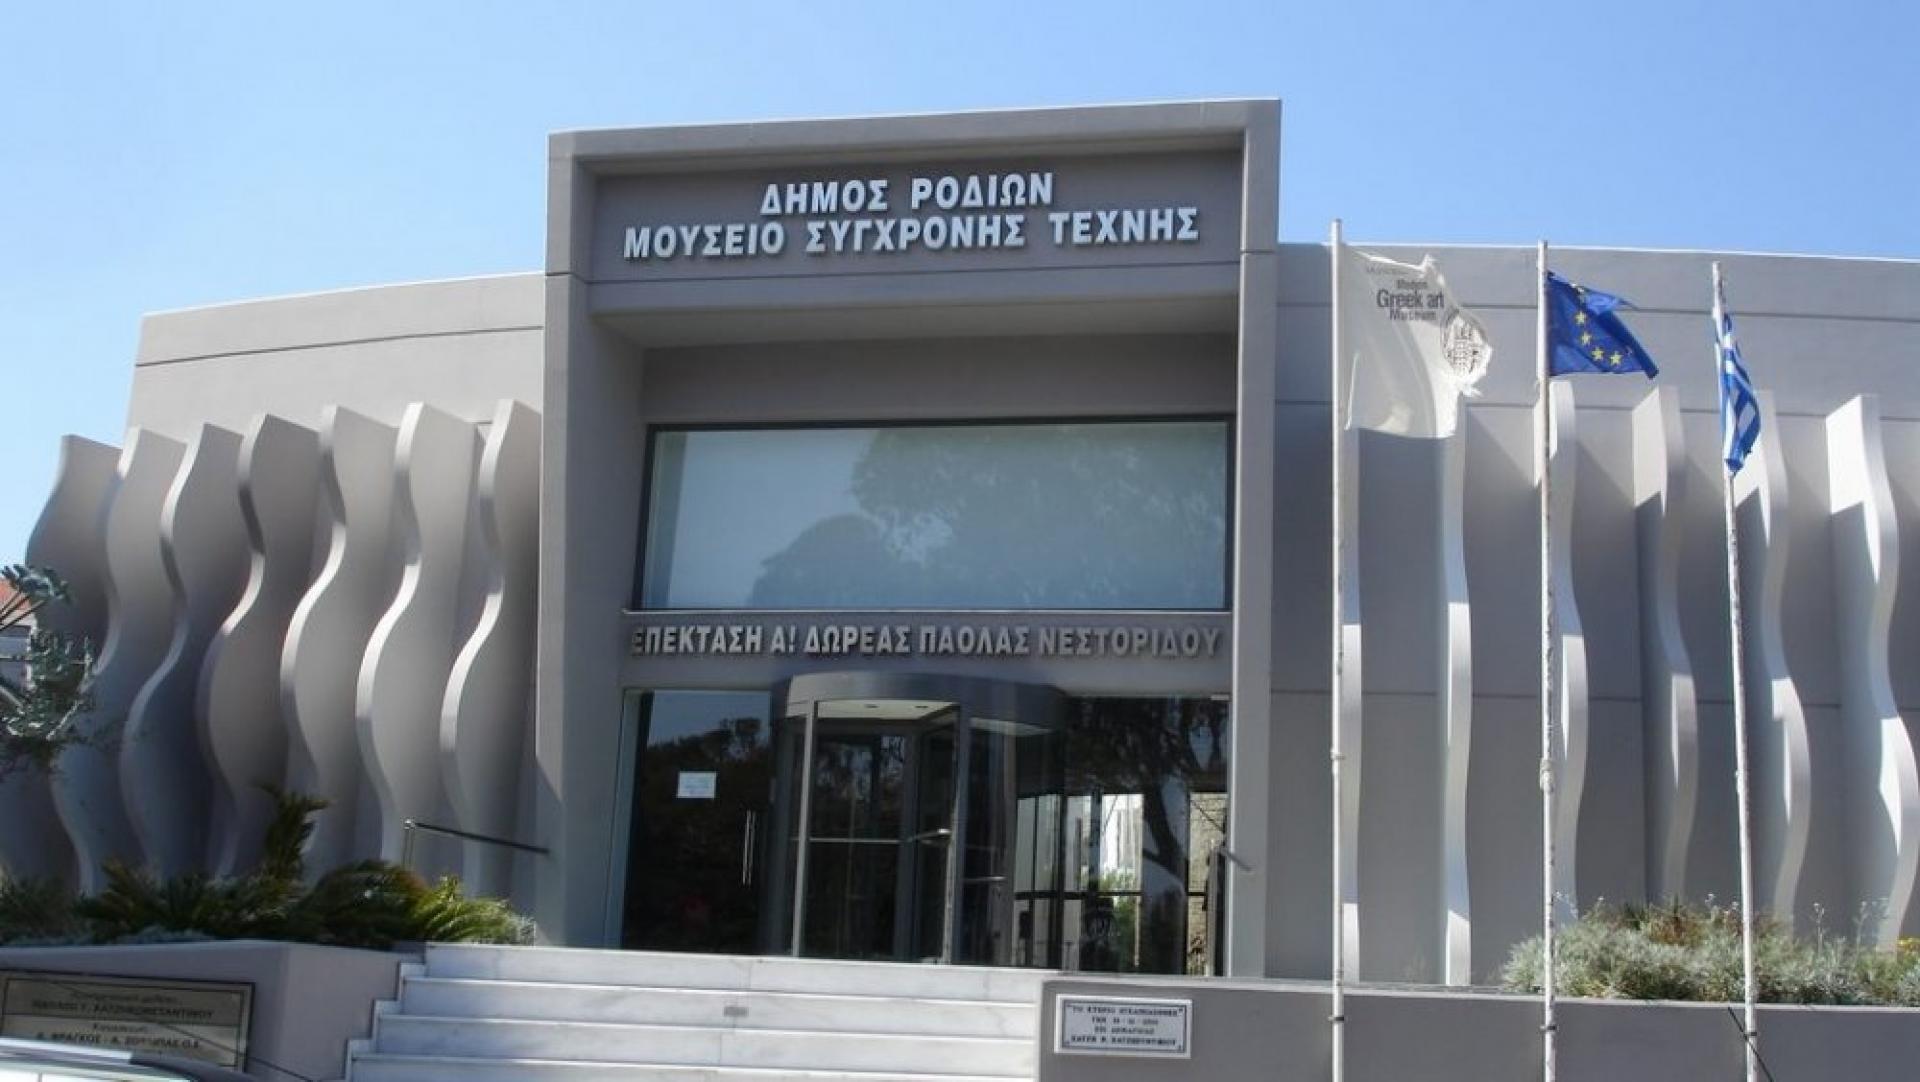 Modern Greek Art Museum